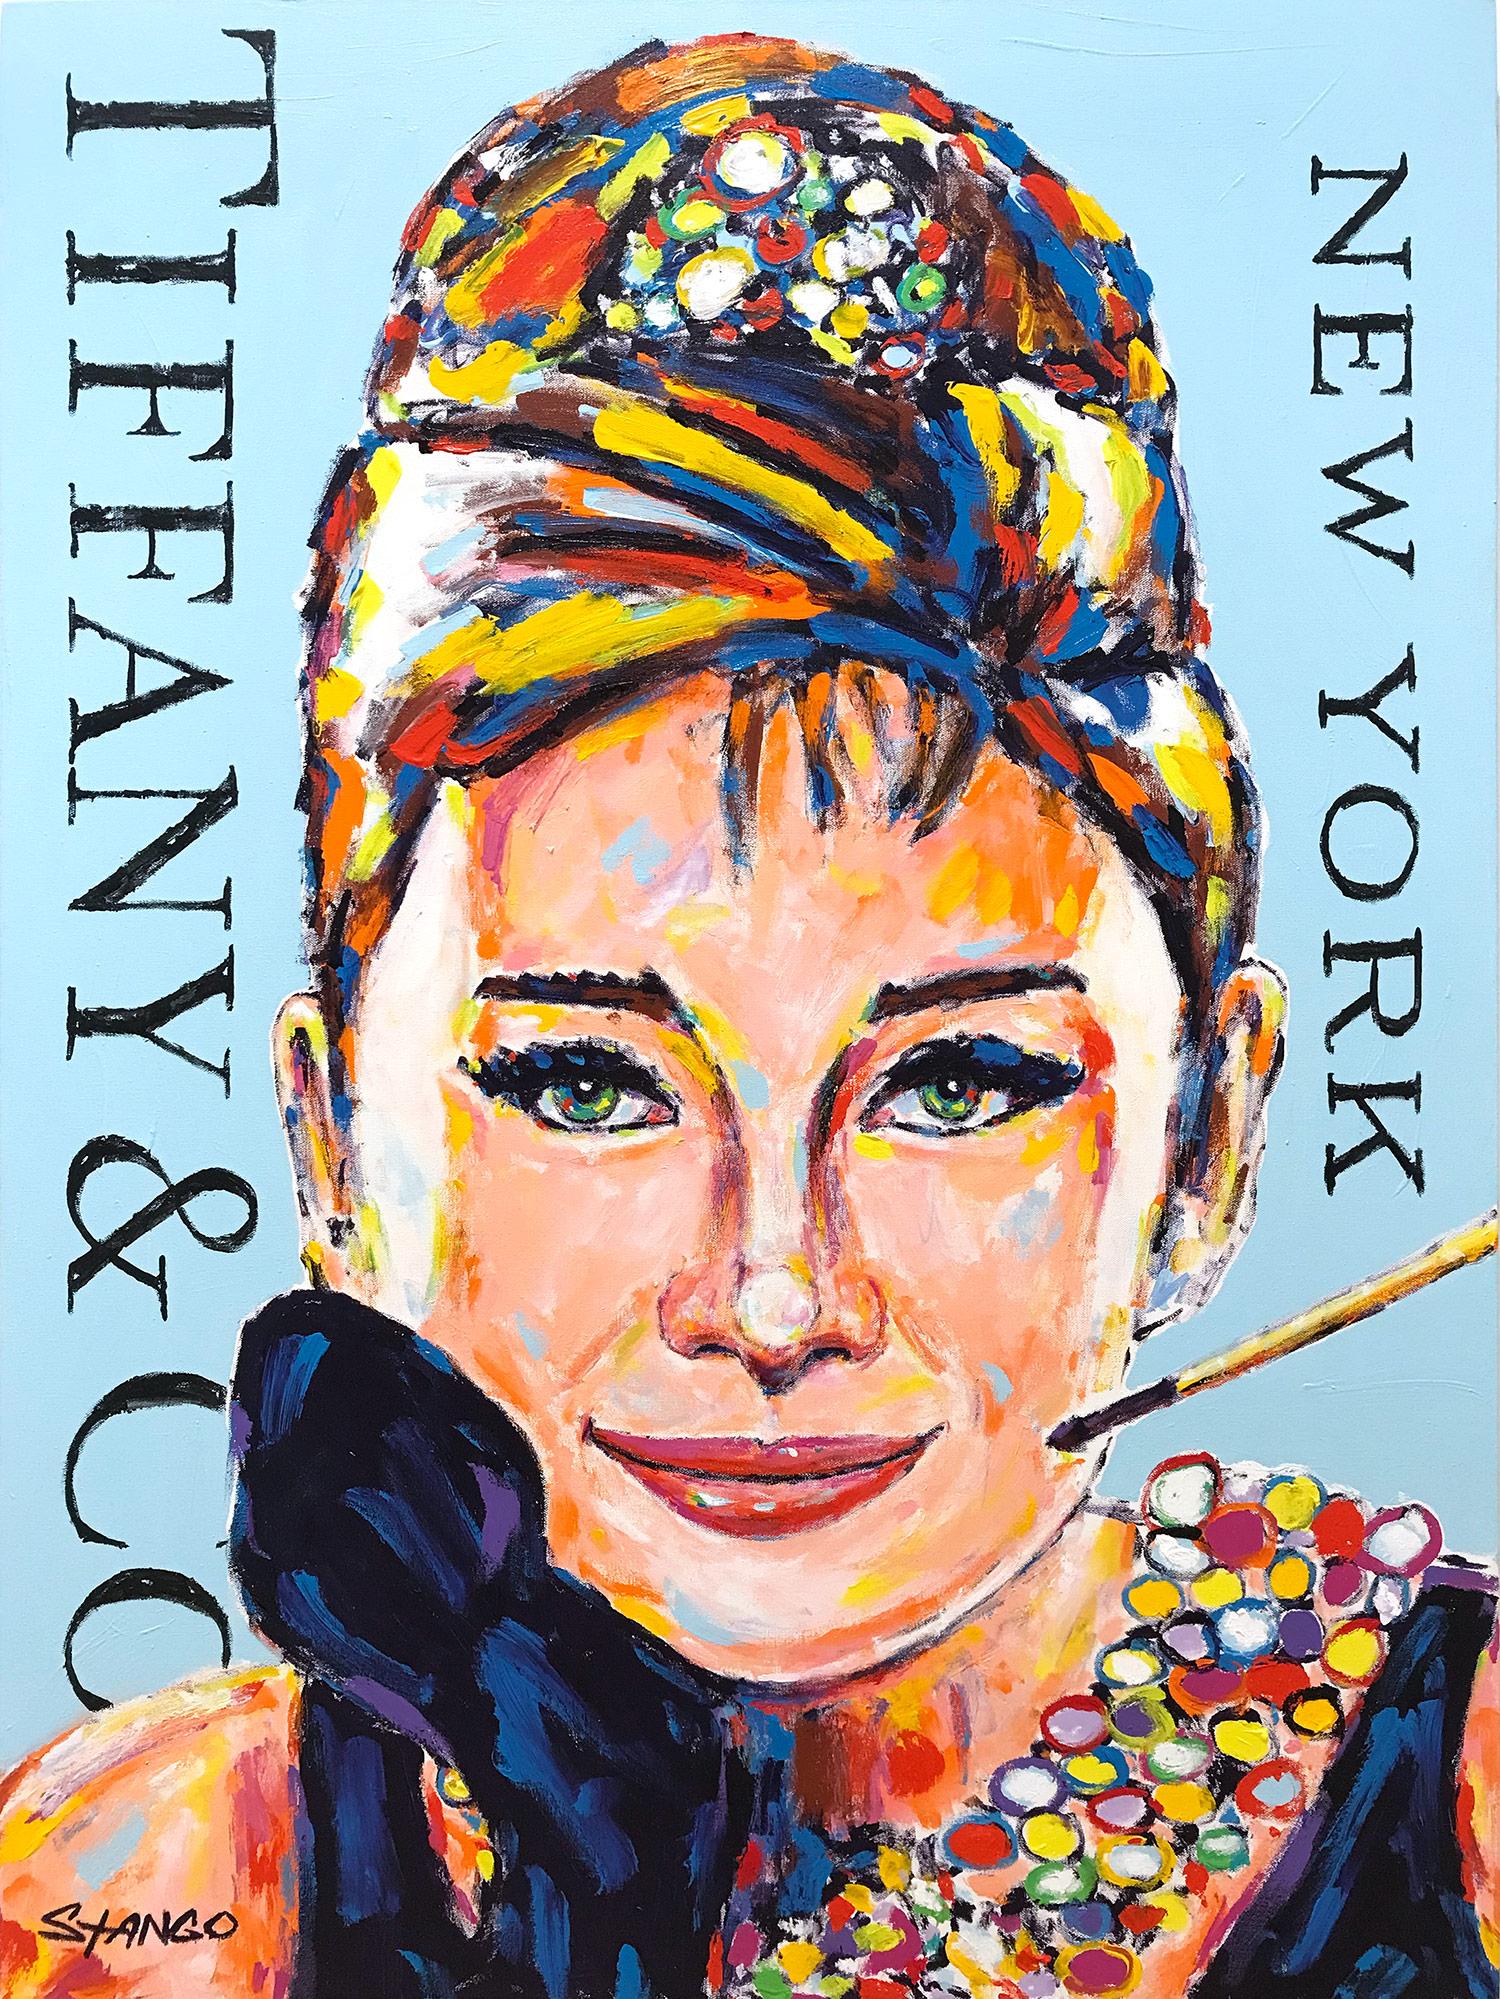 John Stango Abstract Painting – Audrey Hepburn" Audrey & Tiffany & Co. Pop-Art-Acryl-Gemälde auf Leinwand